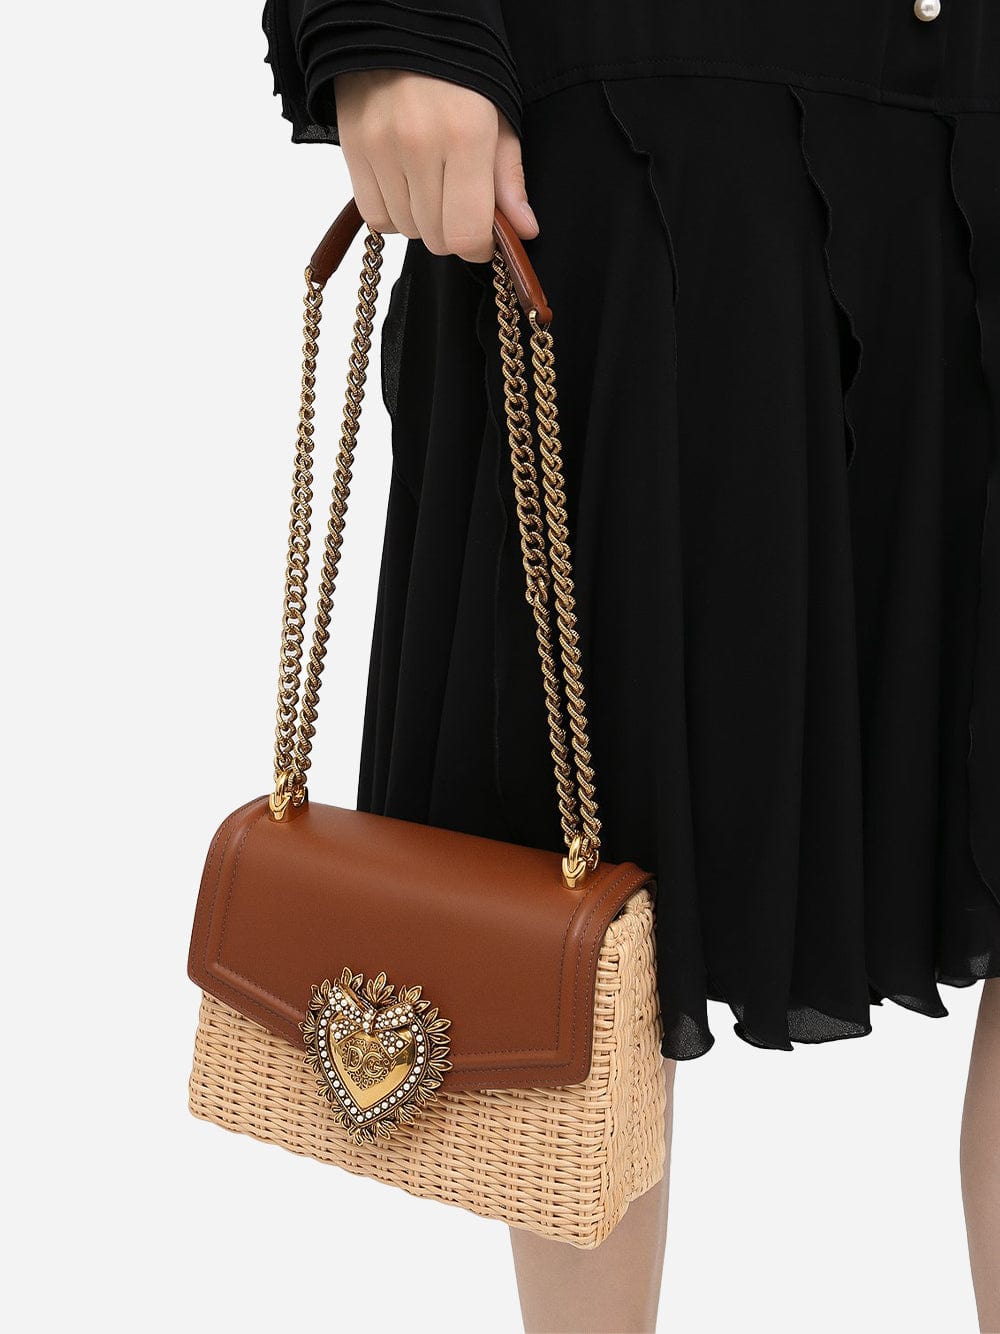 Dolce & Gabbana Devotion Crossbody Bag